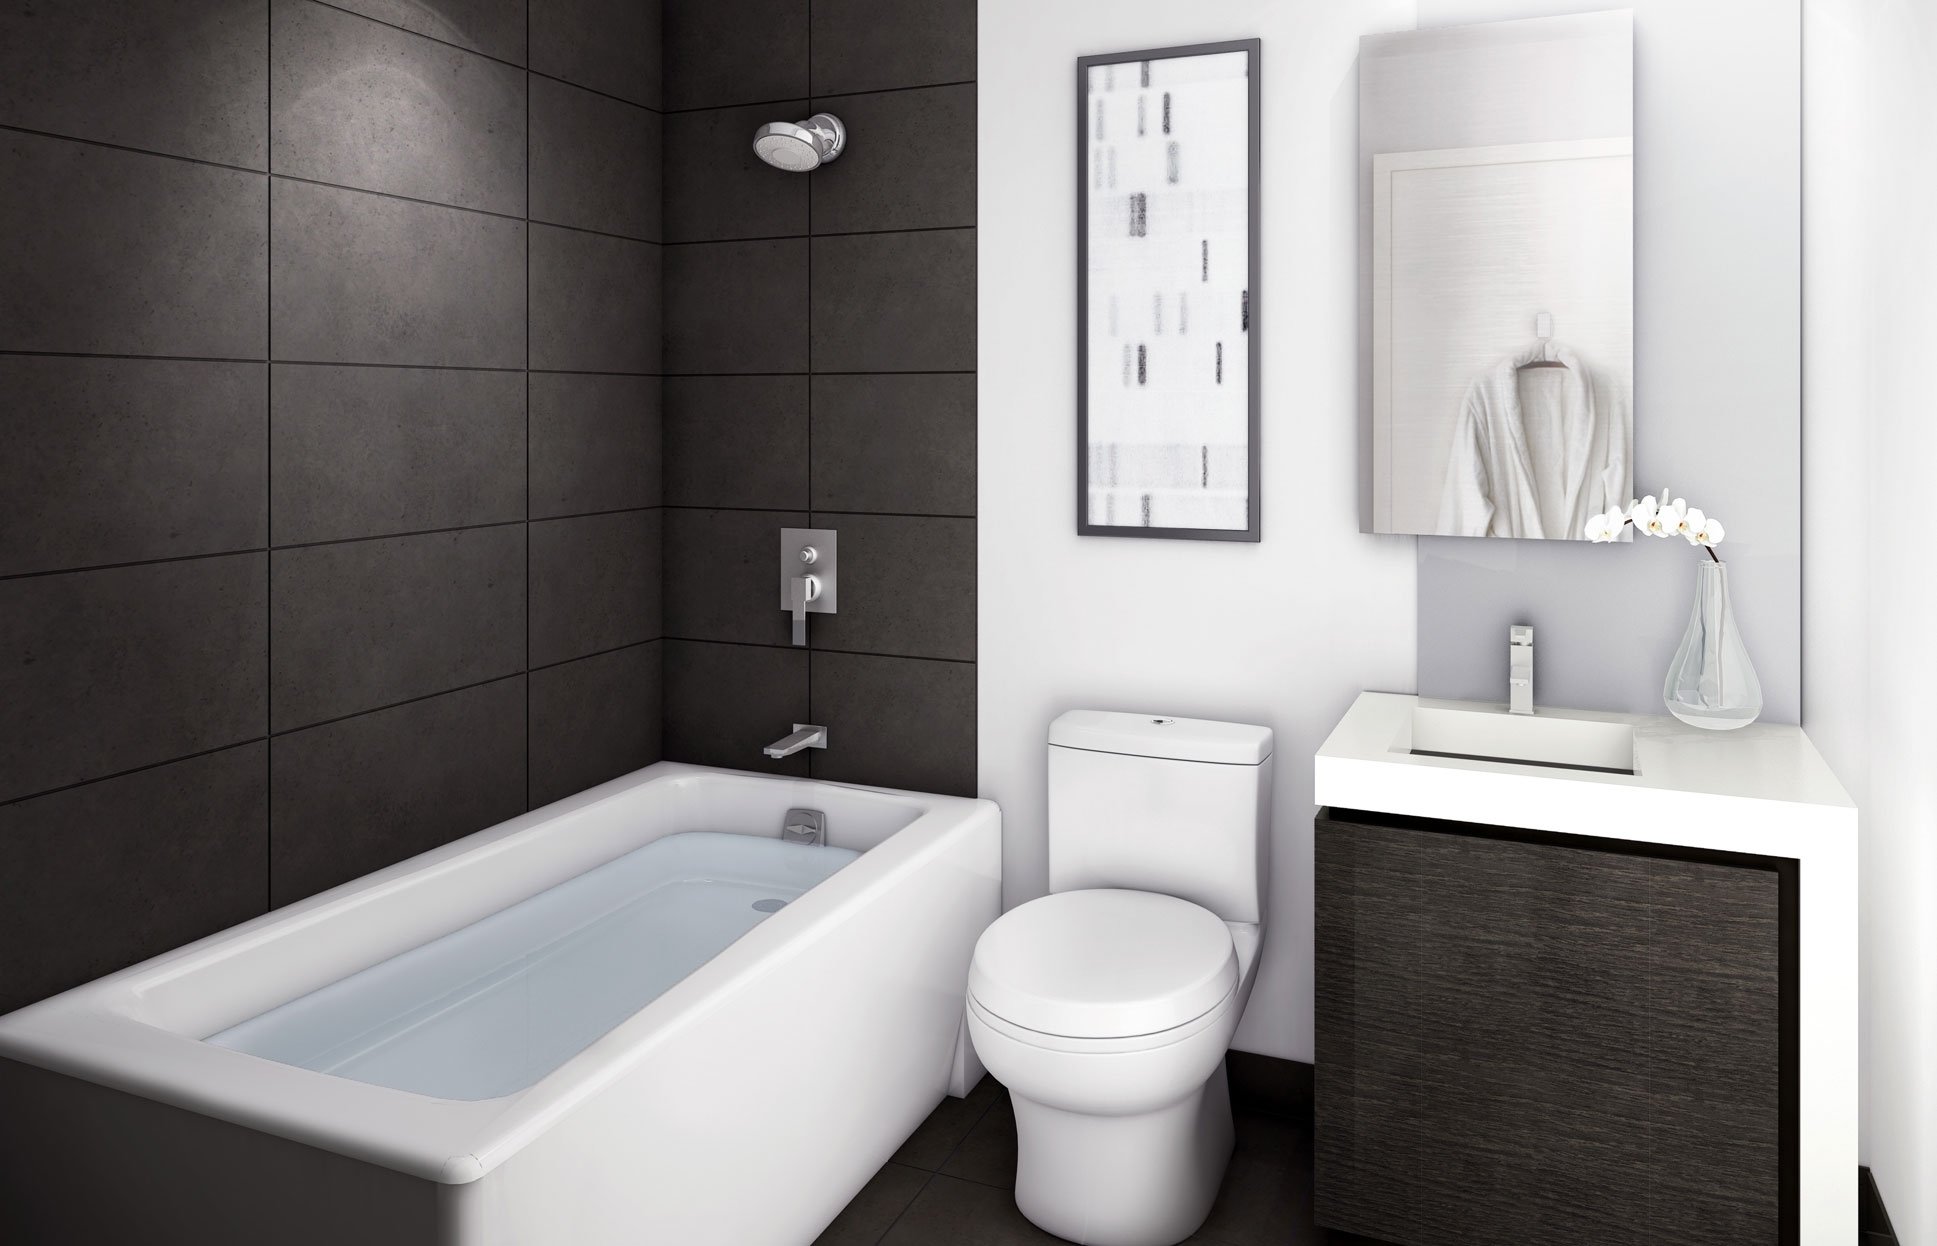 10 Perfect Small Bathroom Ideas Photo Gallery bathroom design small bathroom with modern and luxurious home 2022